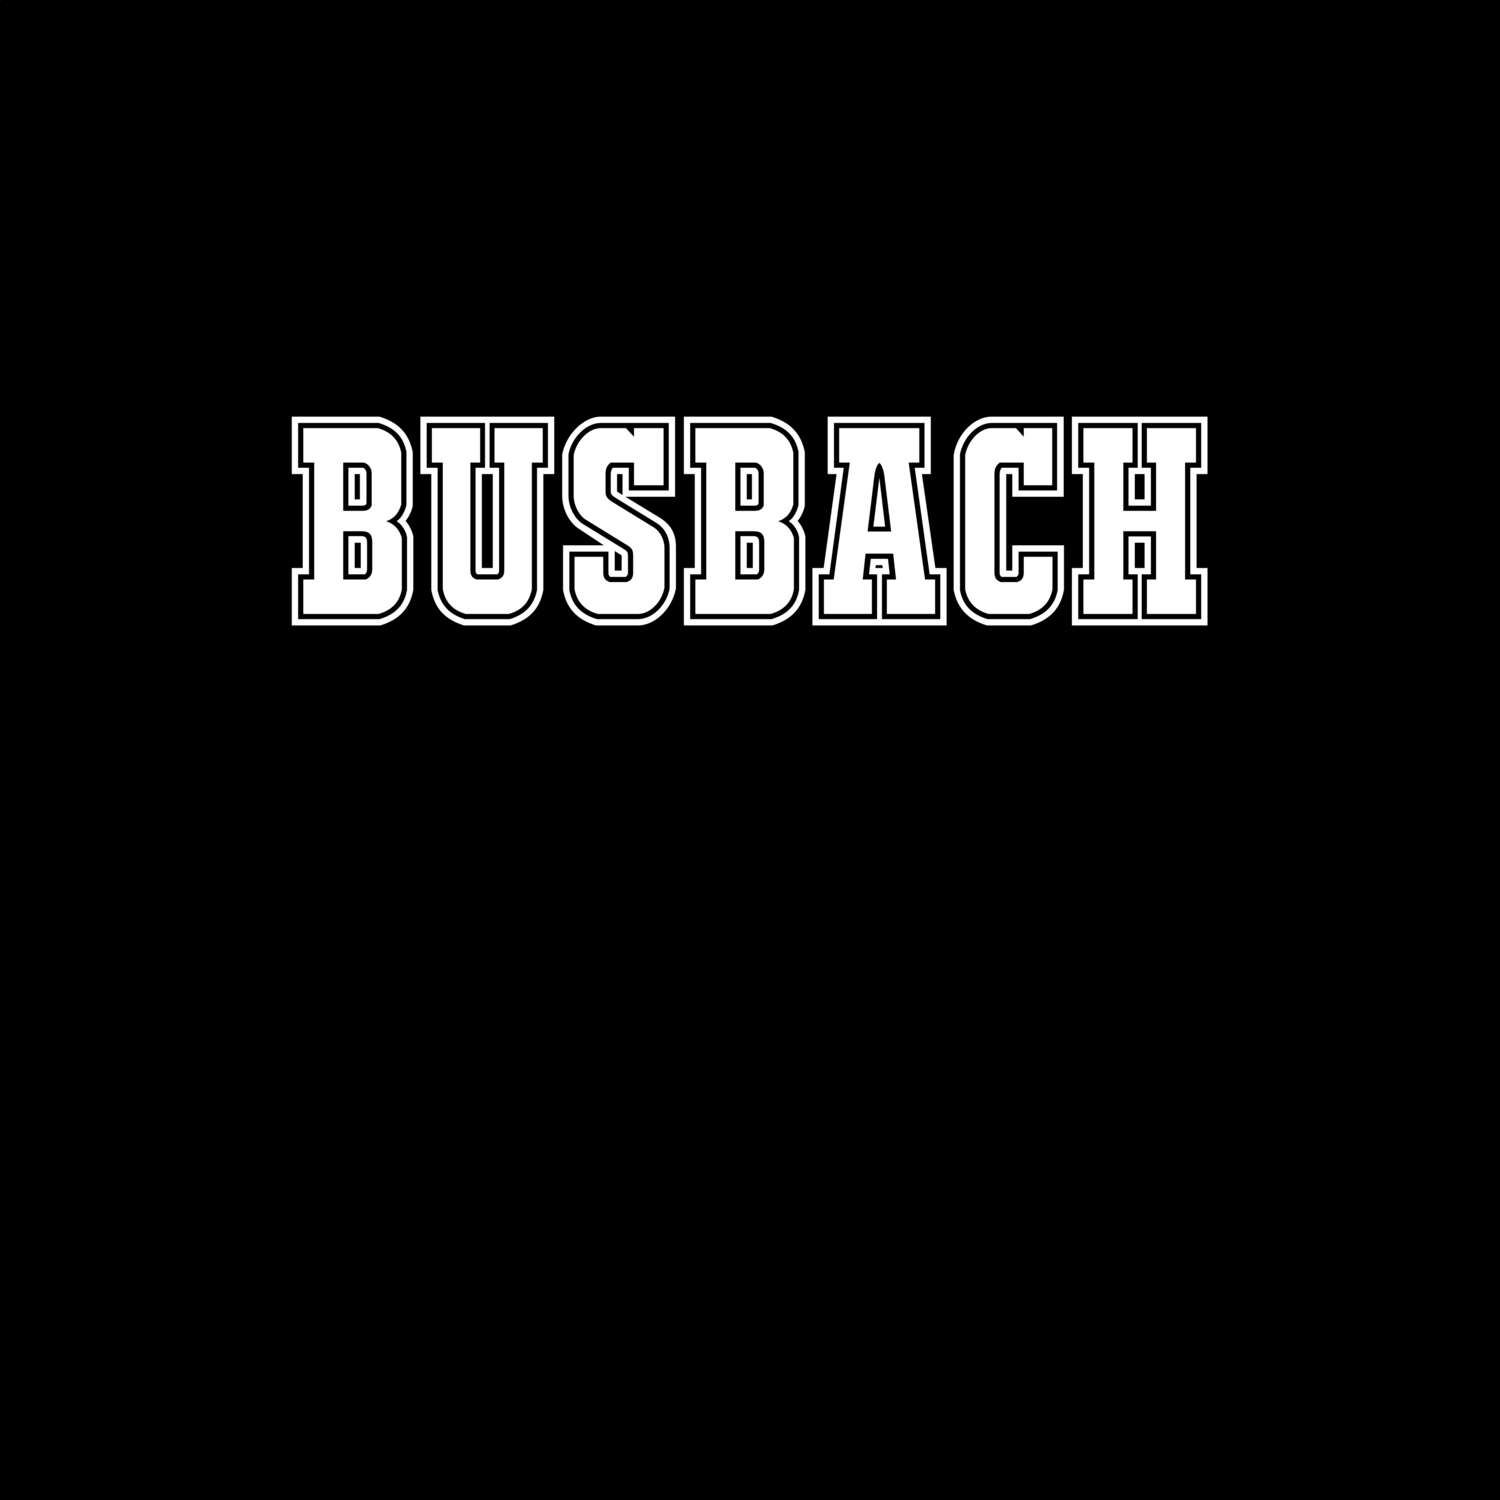 Busbach T-Shirt »Classic«